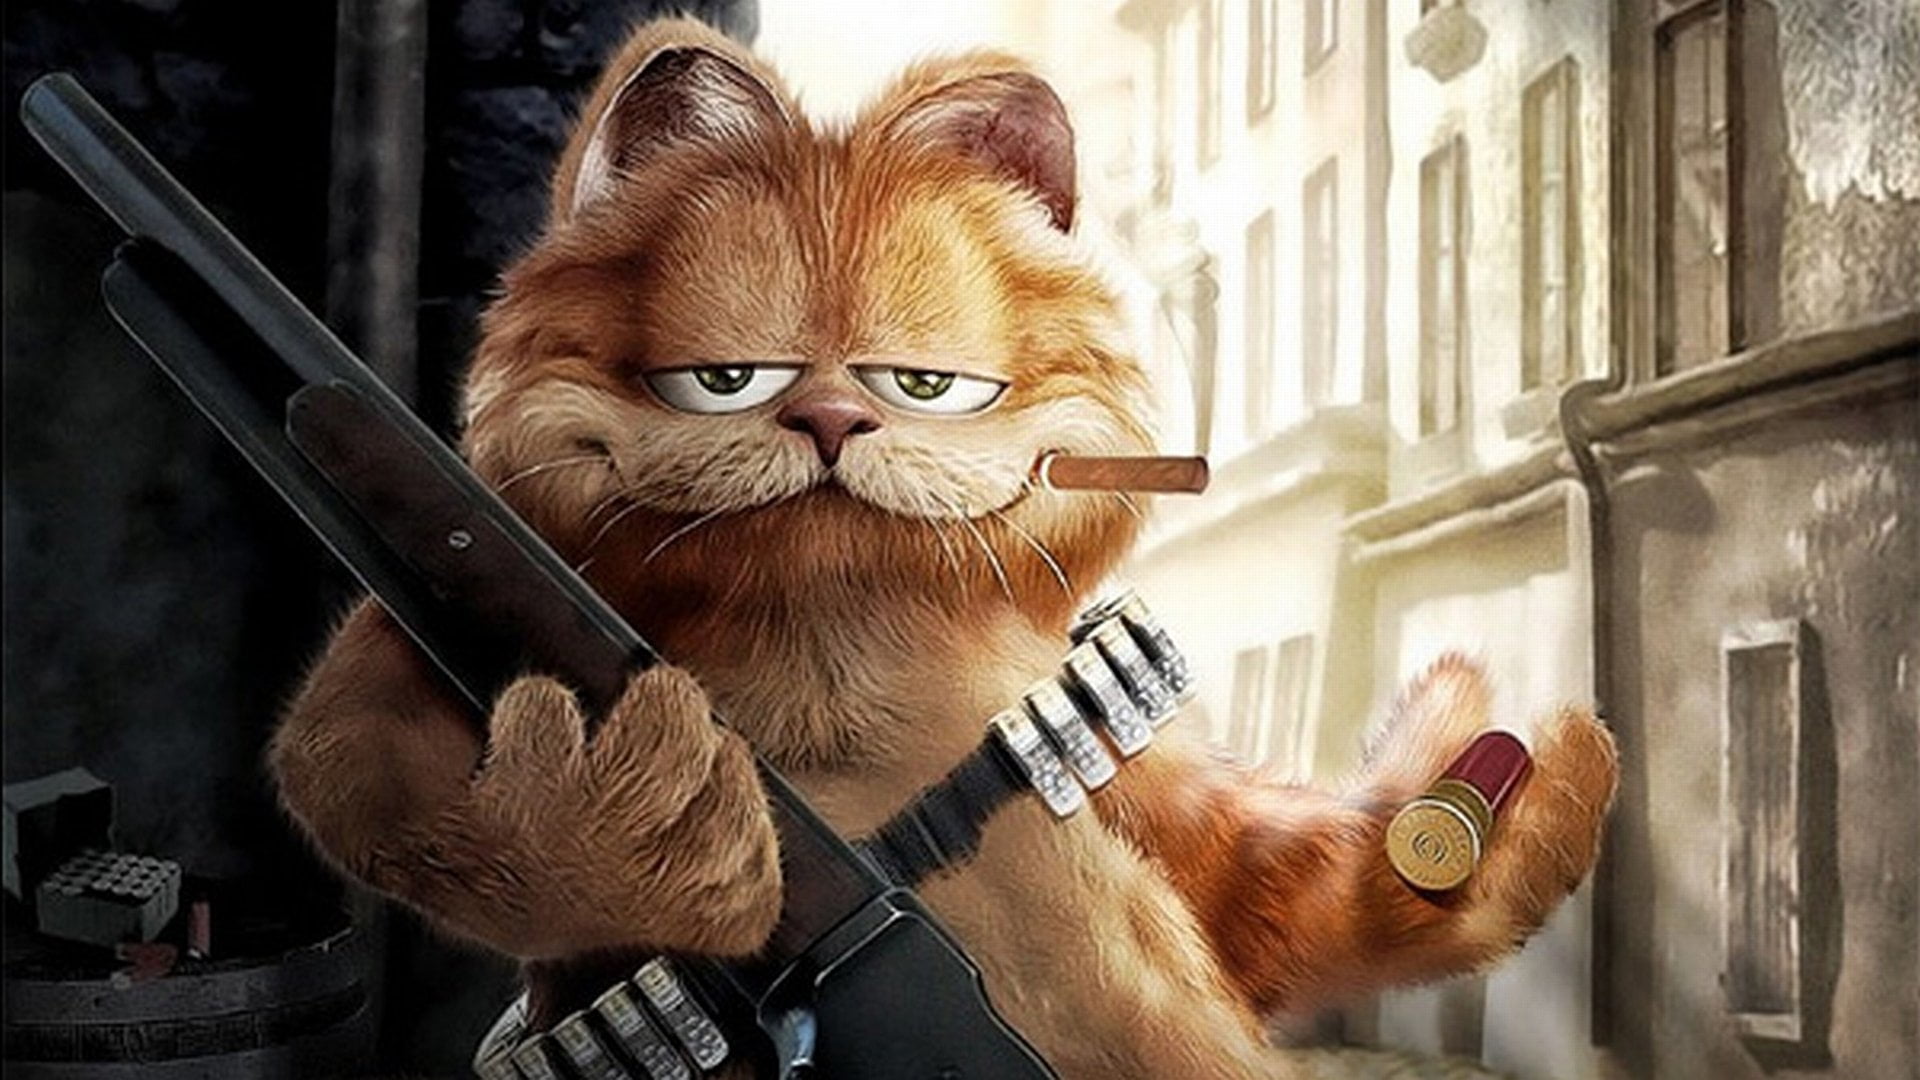 Garfield illustration, portrait, looking at camera, mammal, one person